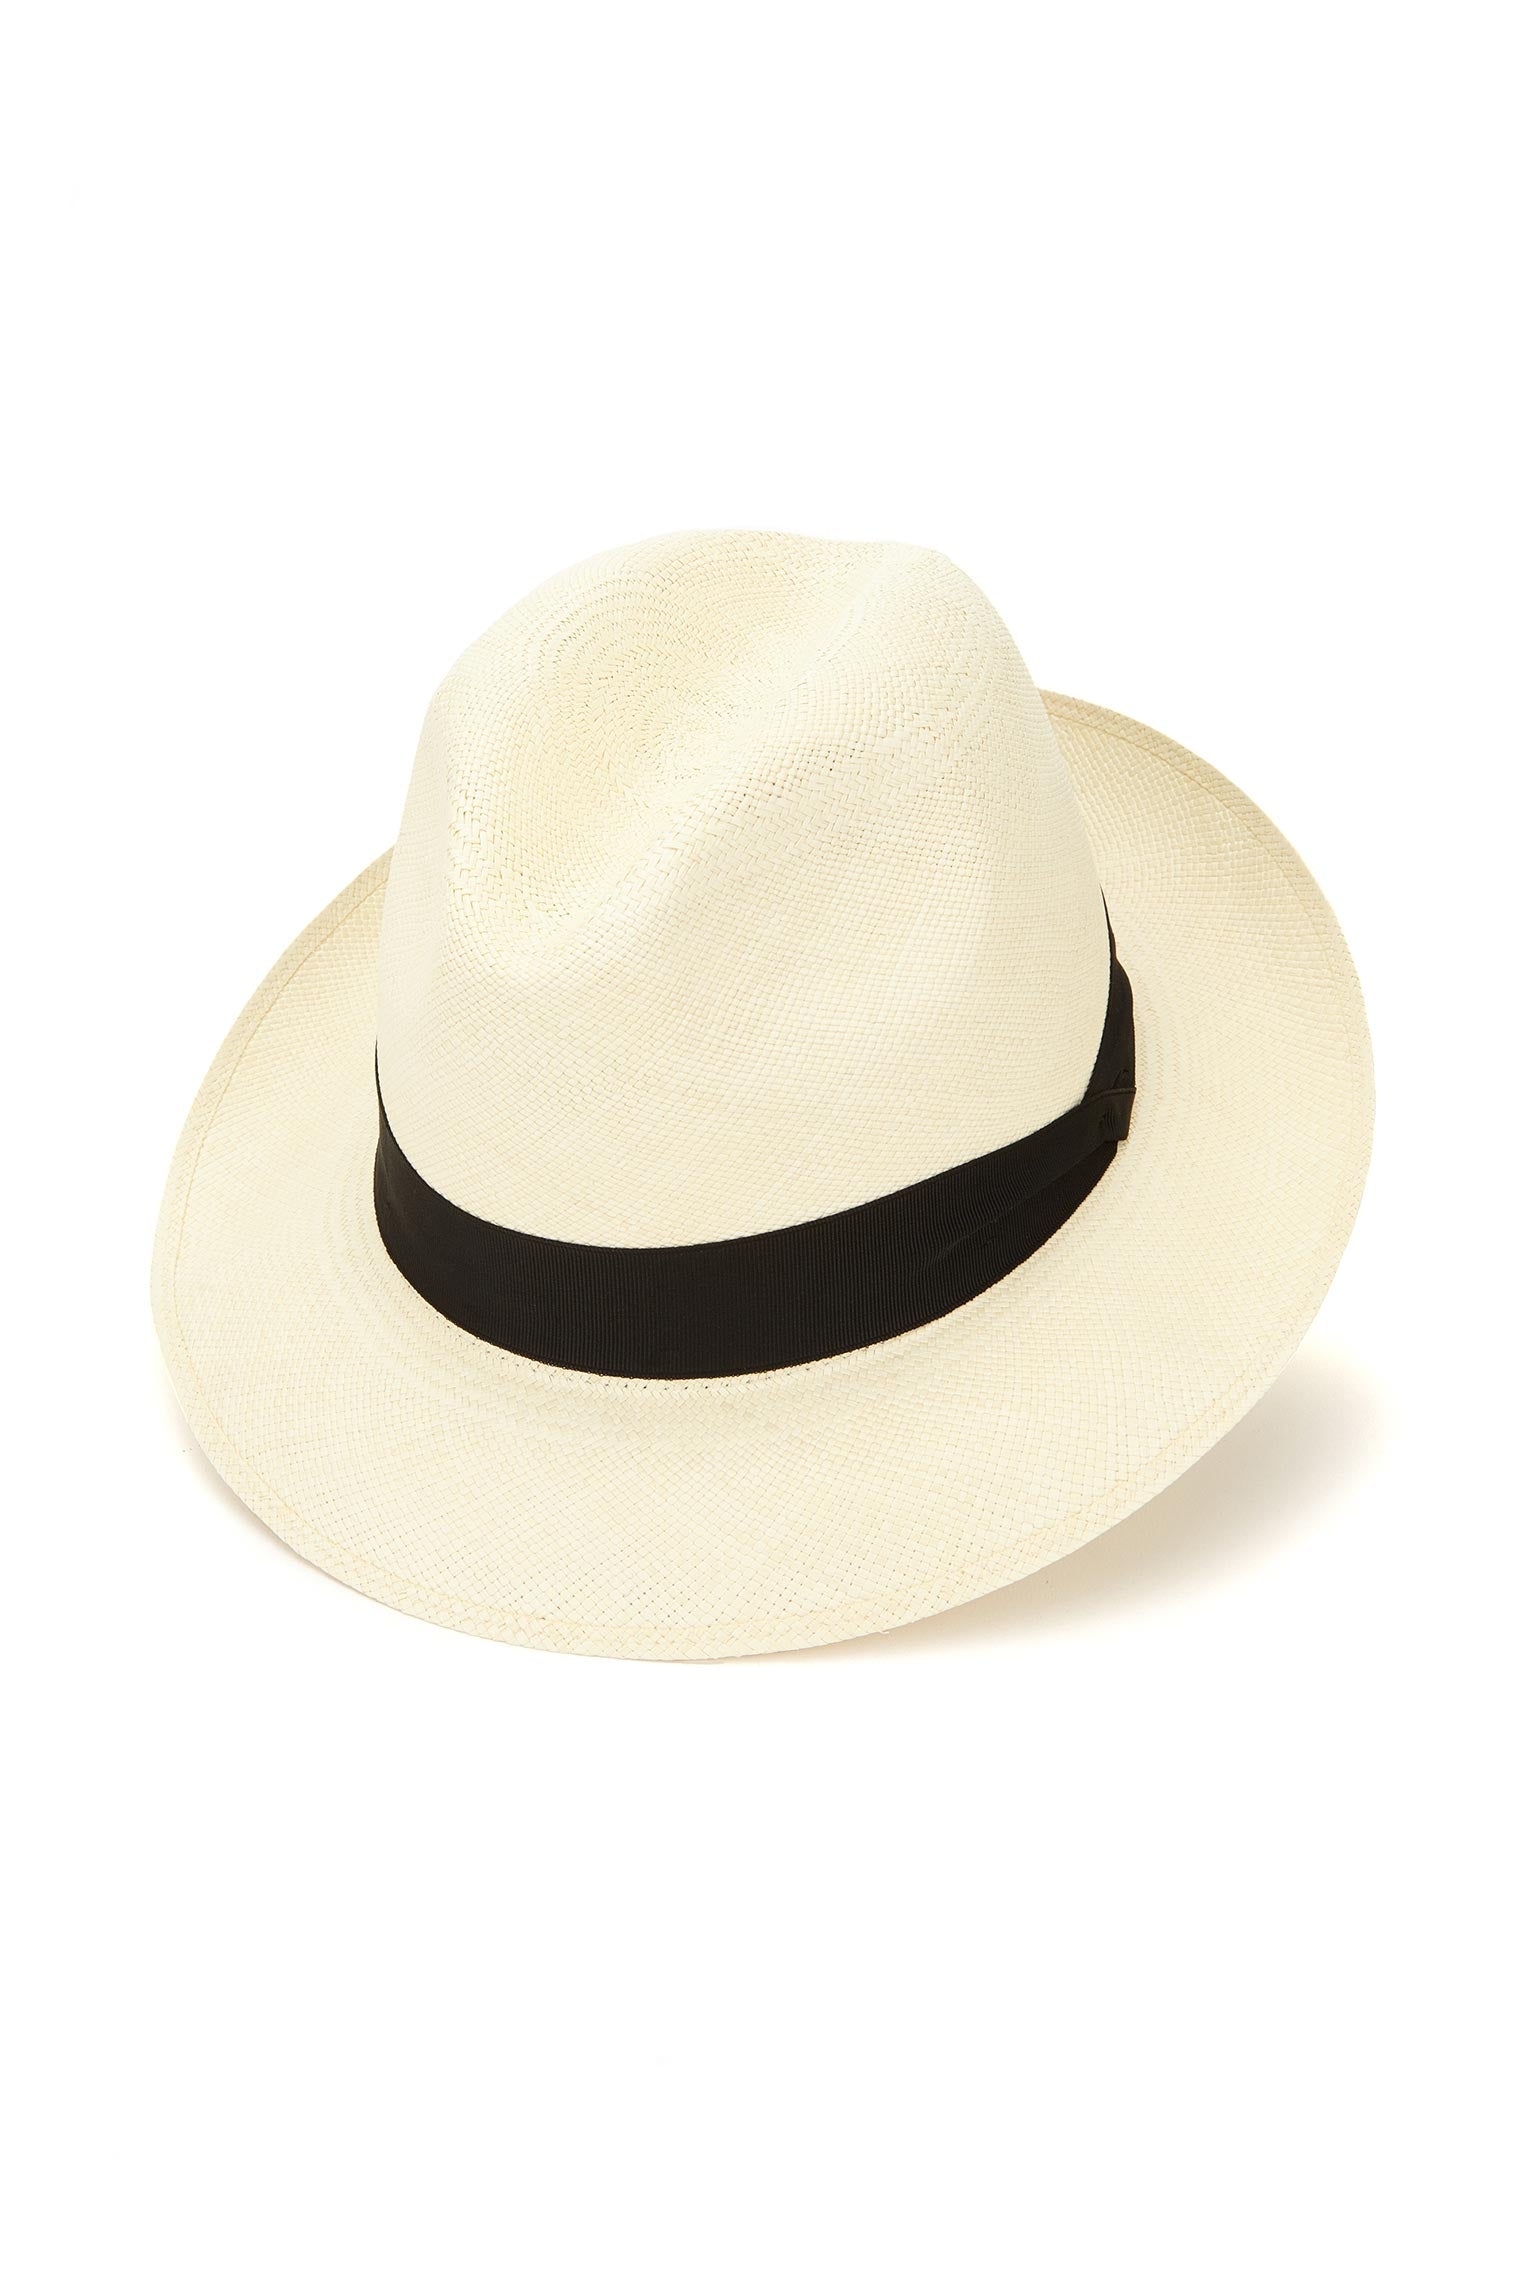 Classic Panama - Sun Hats & Boaters - Lock & Co. Hatters London UK